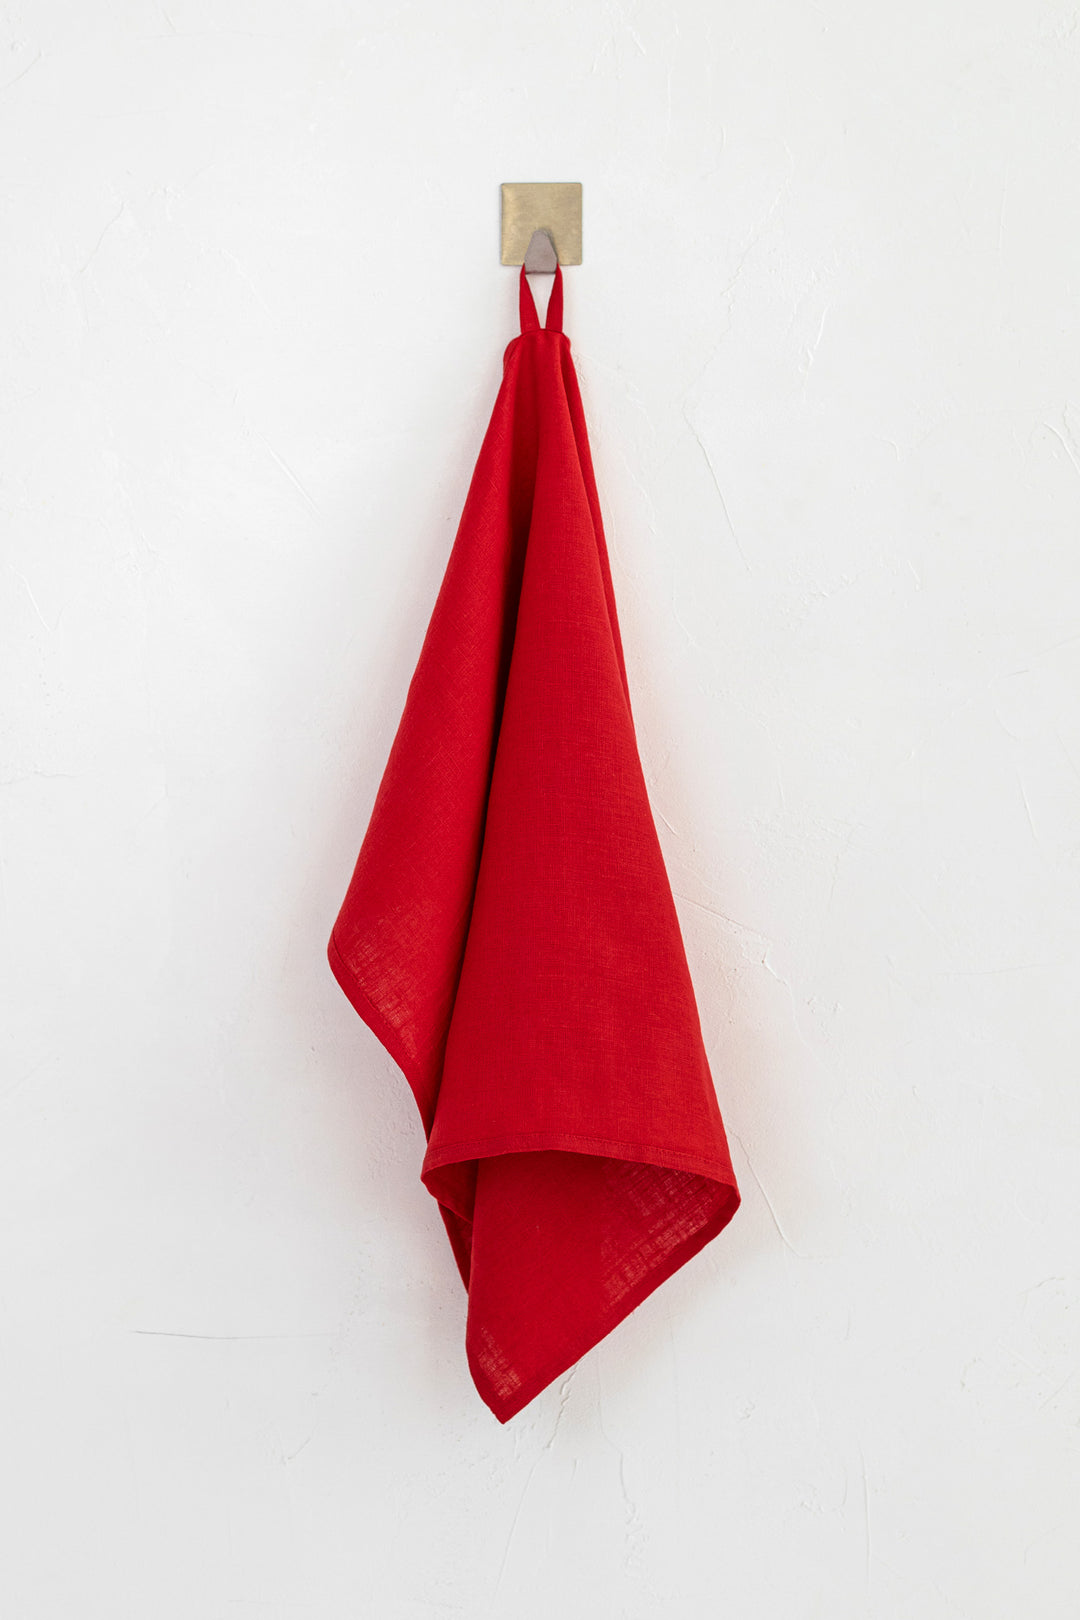 Hanging Linen Tea Towel In Red Color - Daily Linen